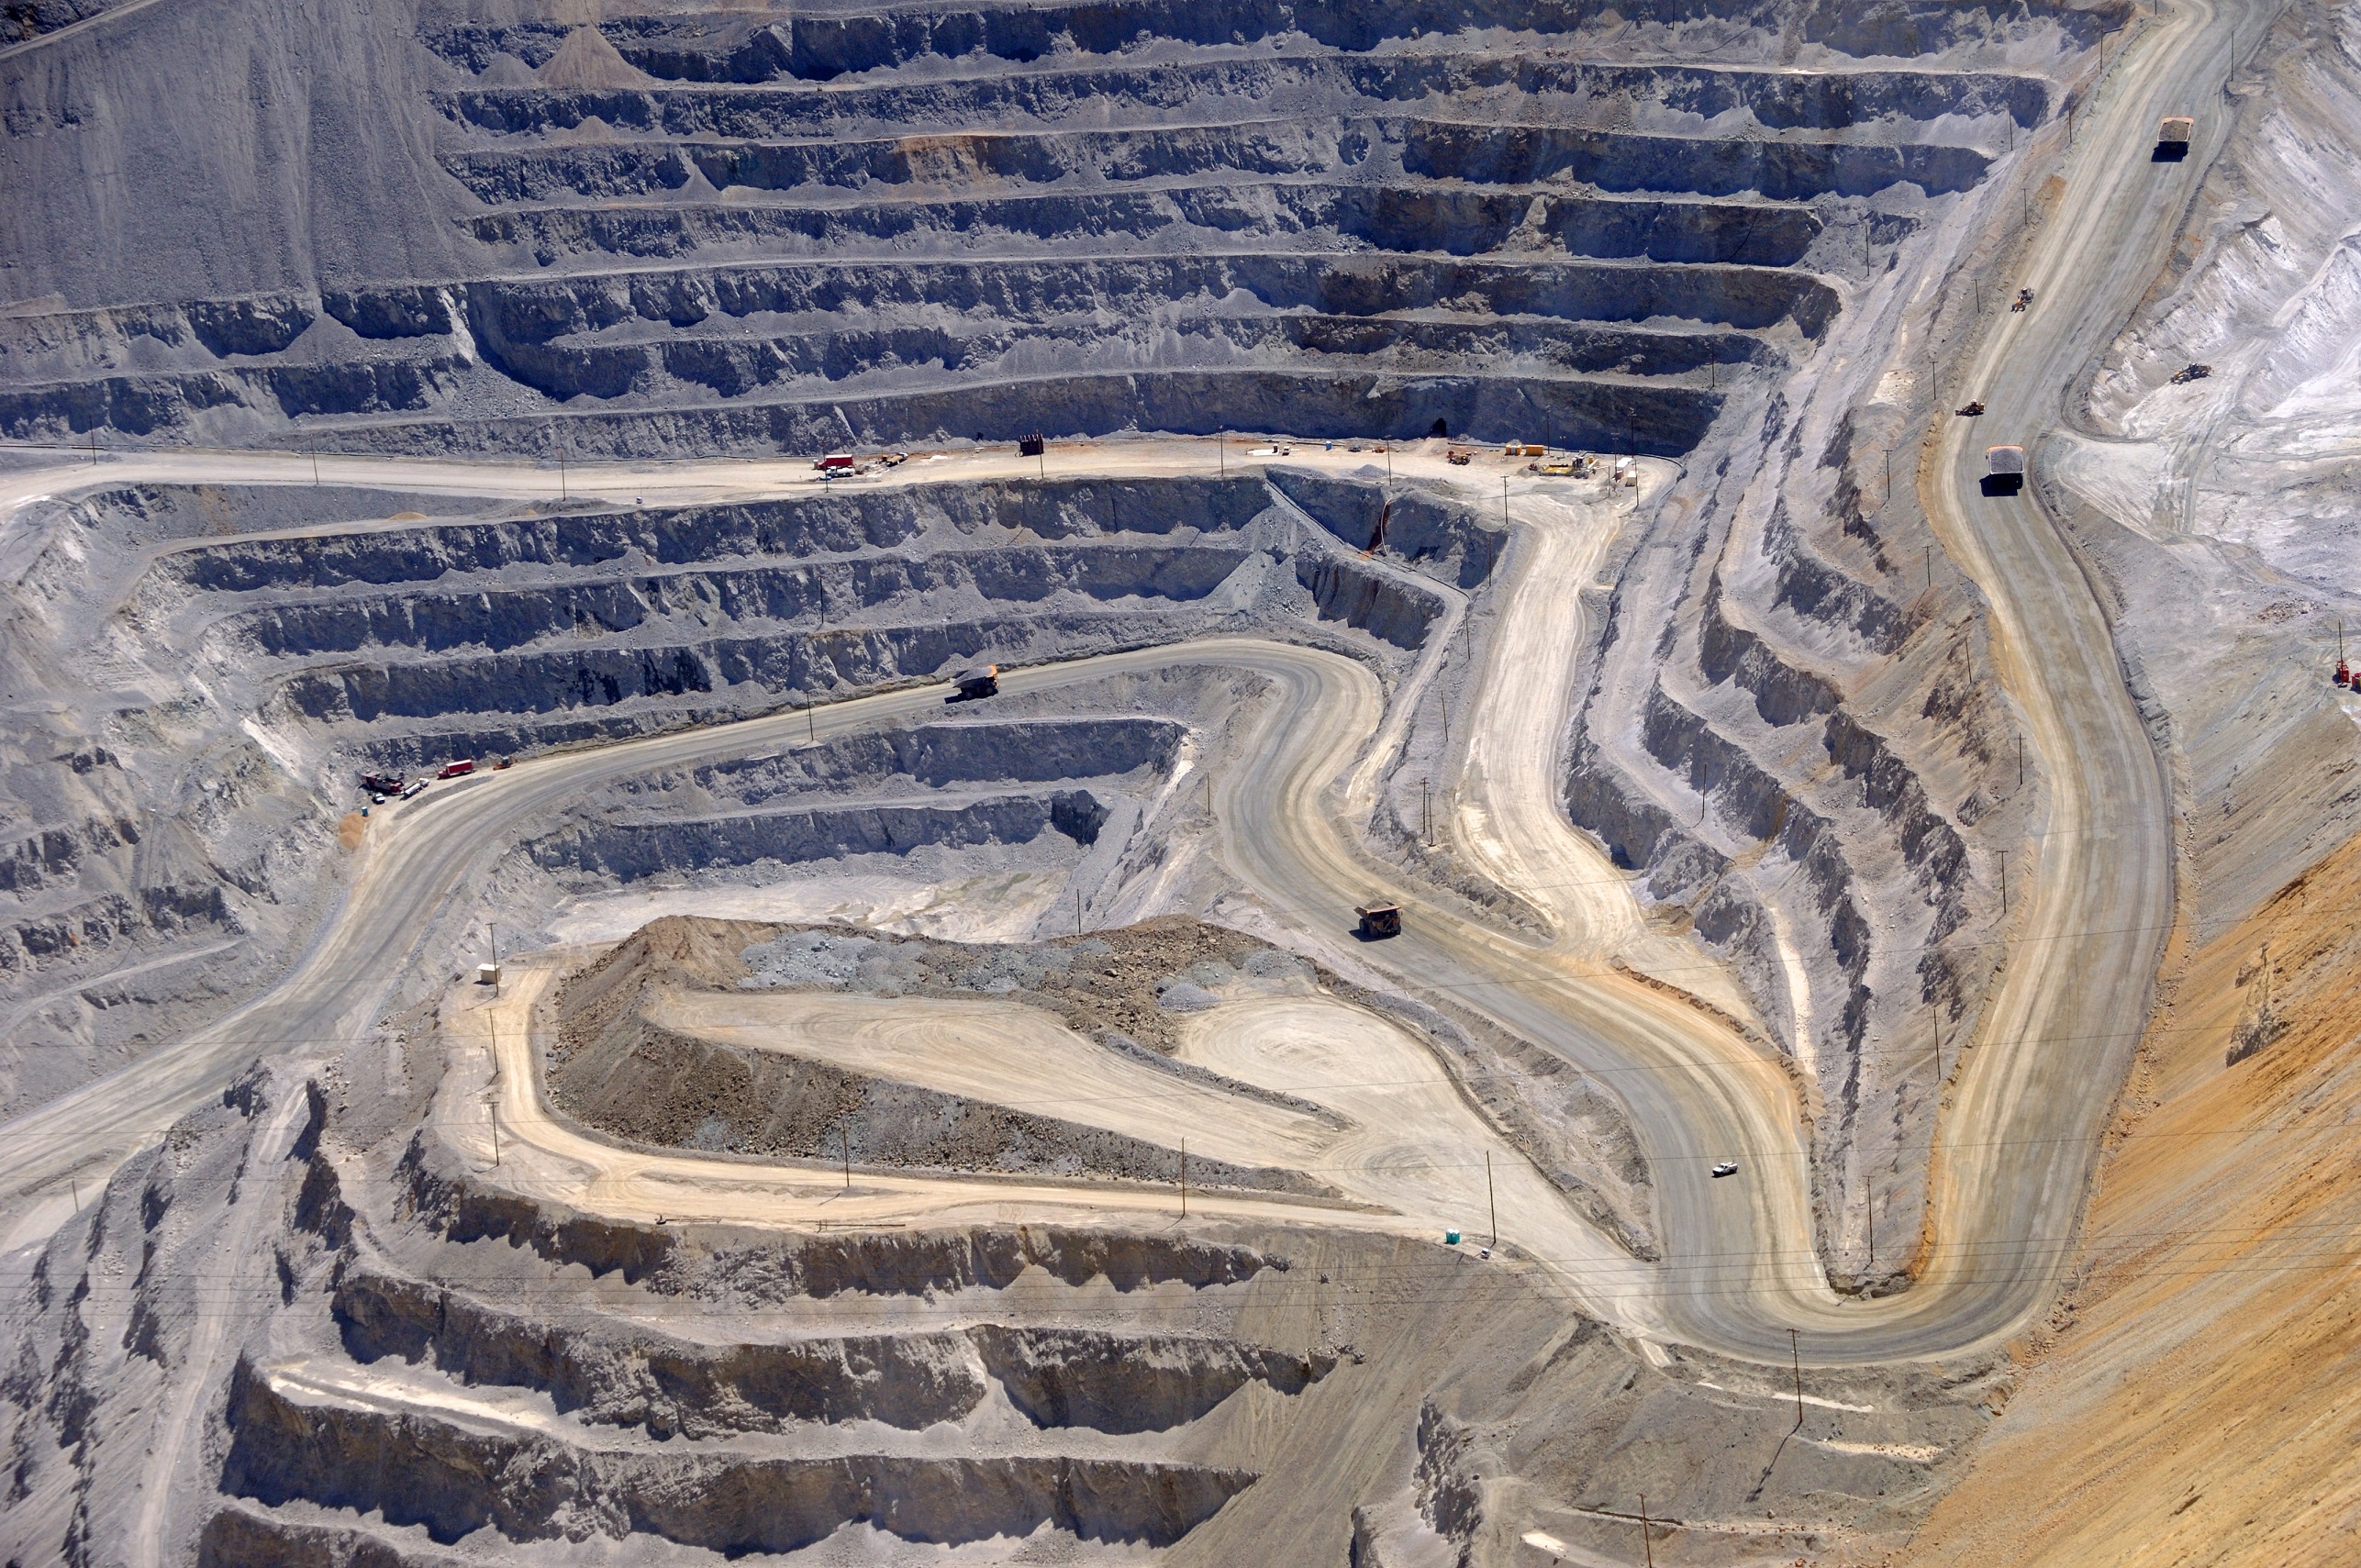 Picture of a mineral mine in Australia